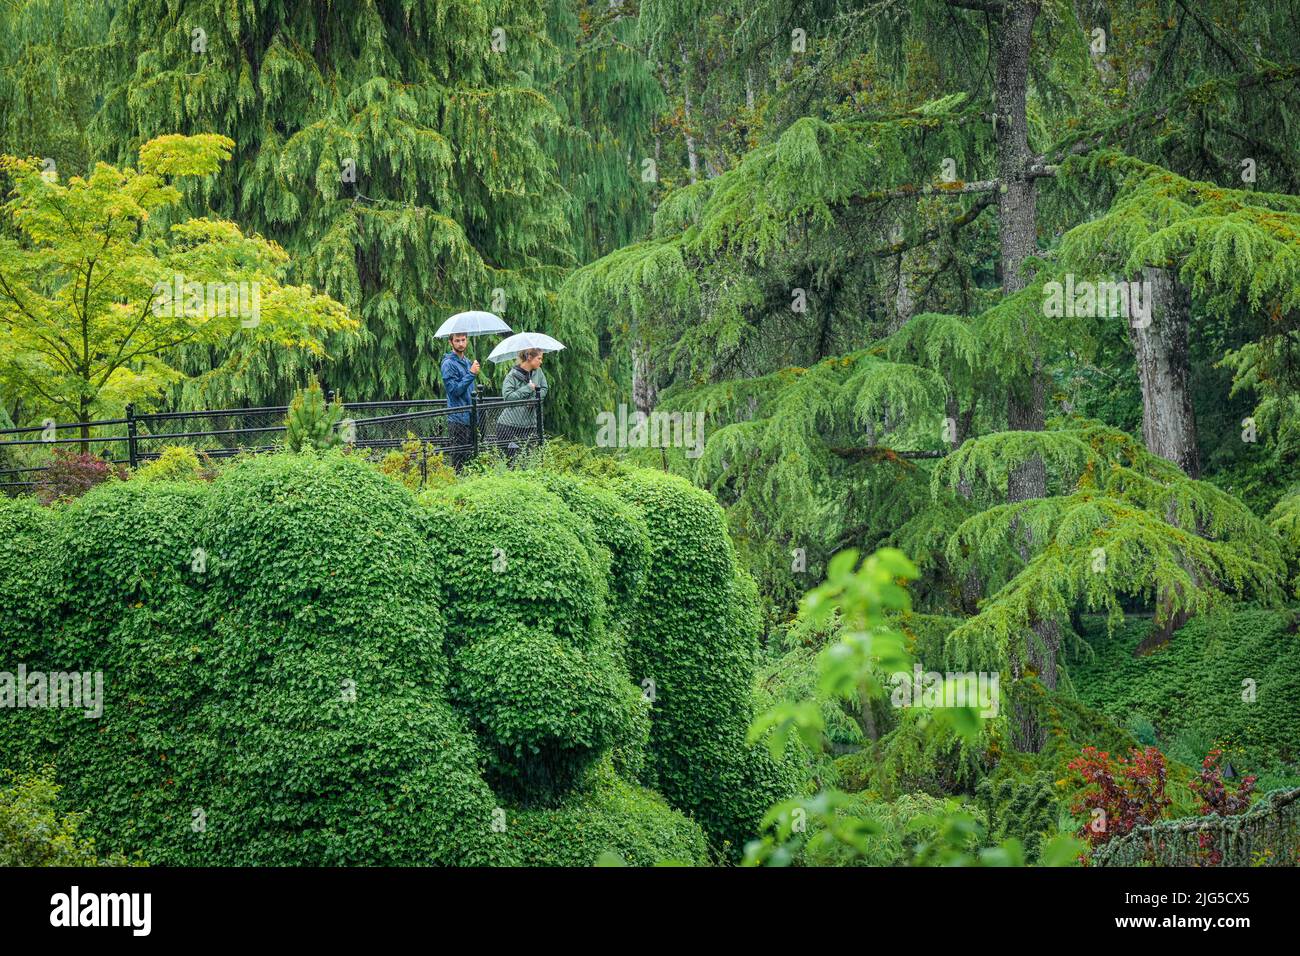 Couple with umbrellas, Sunken Garden lookout, Butchart Gardens, Brentwood Bay, Greater Victoria, British Columbia, Canada Stock Photo